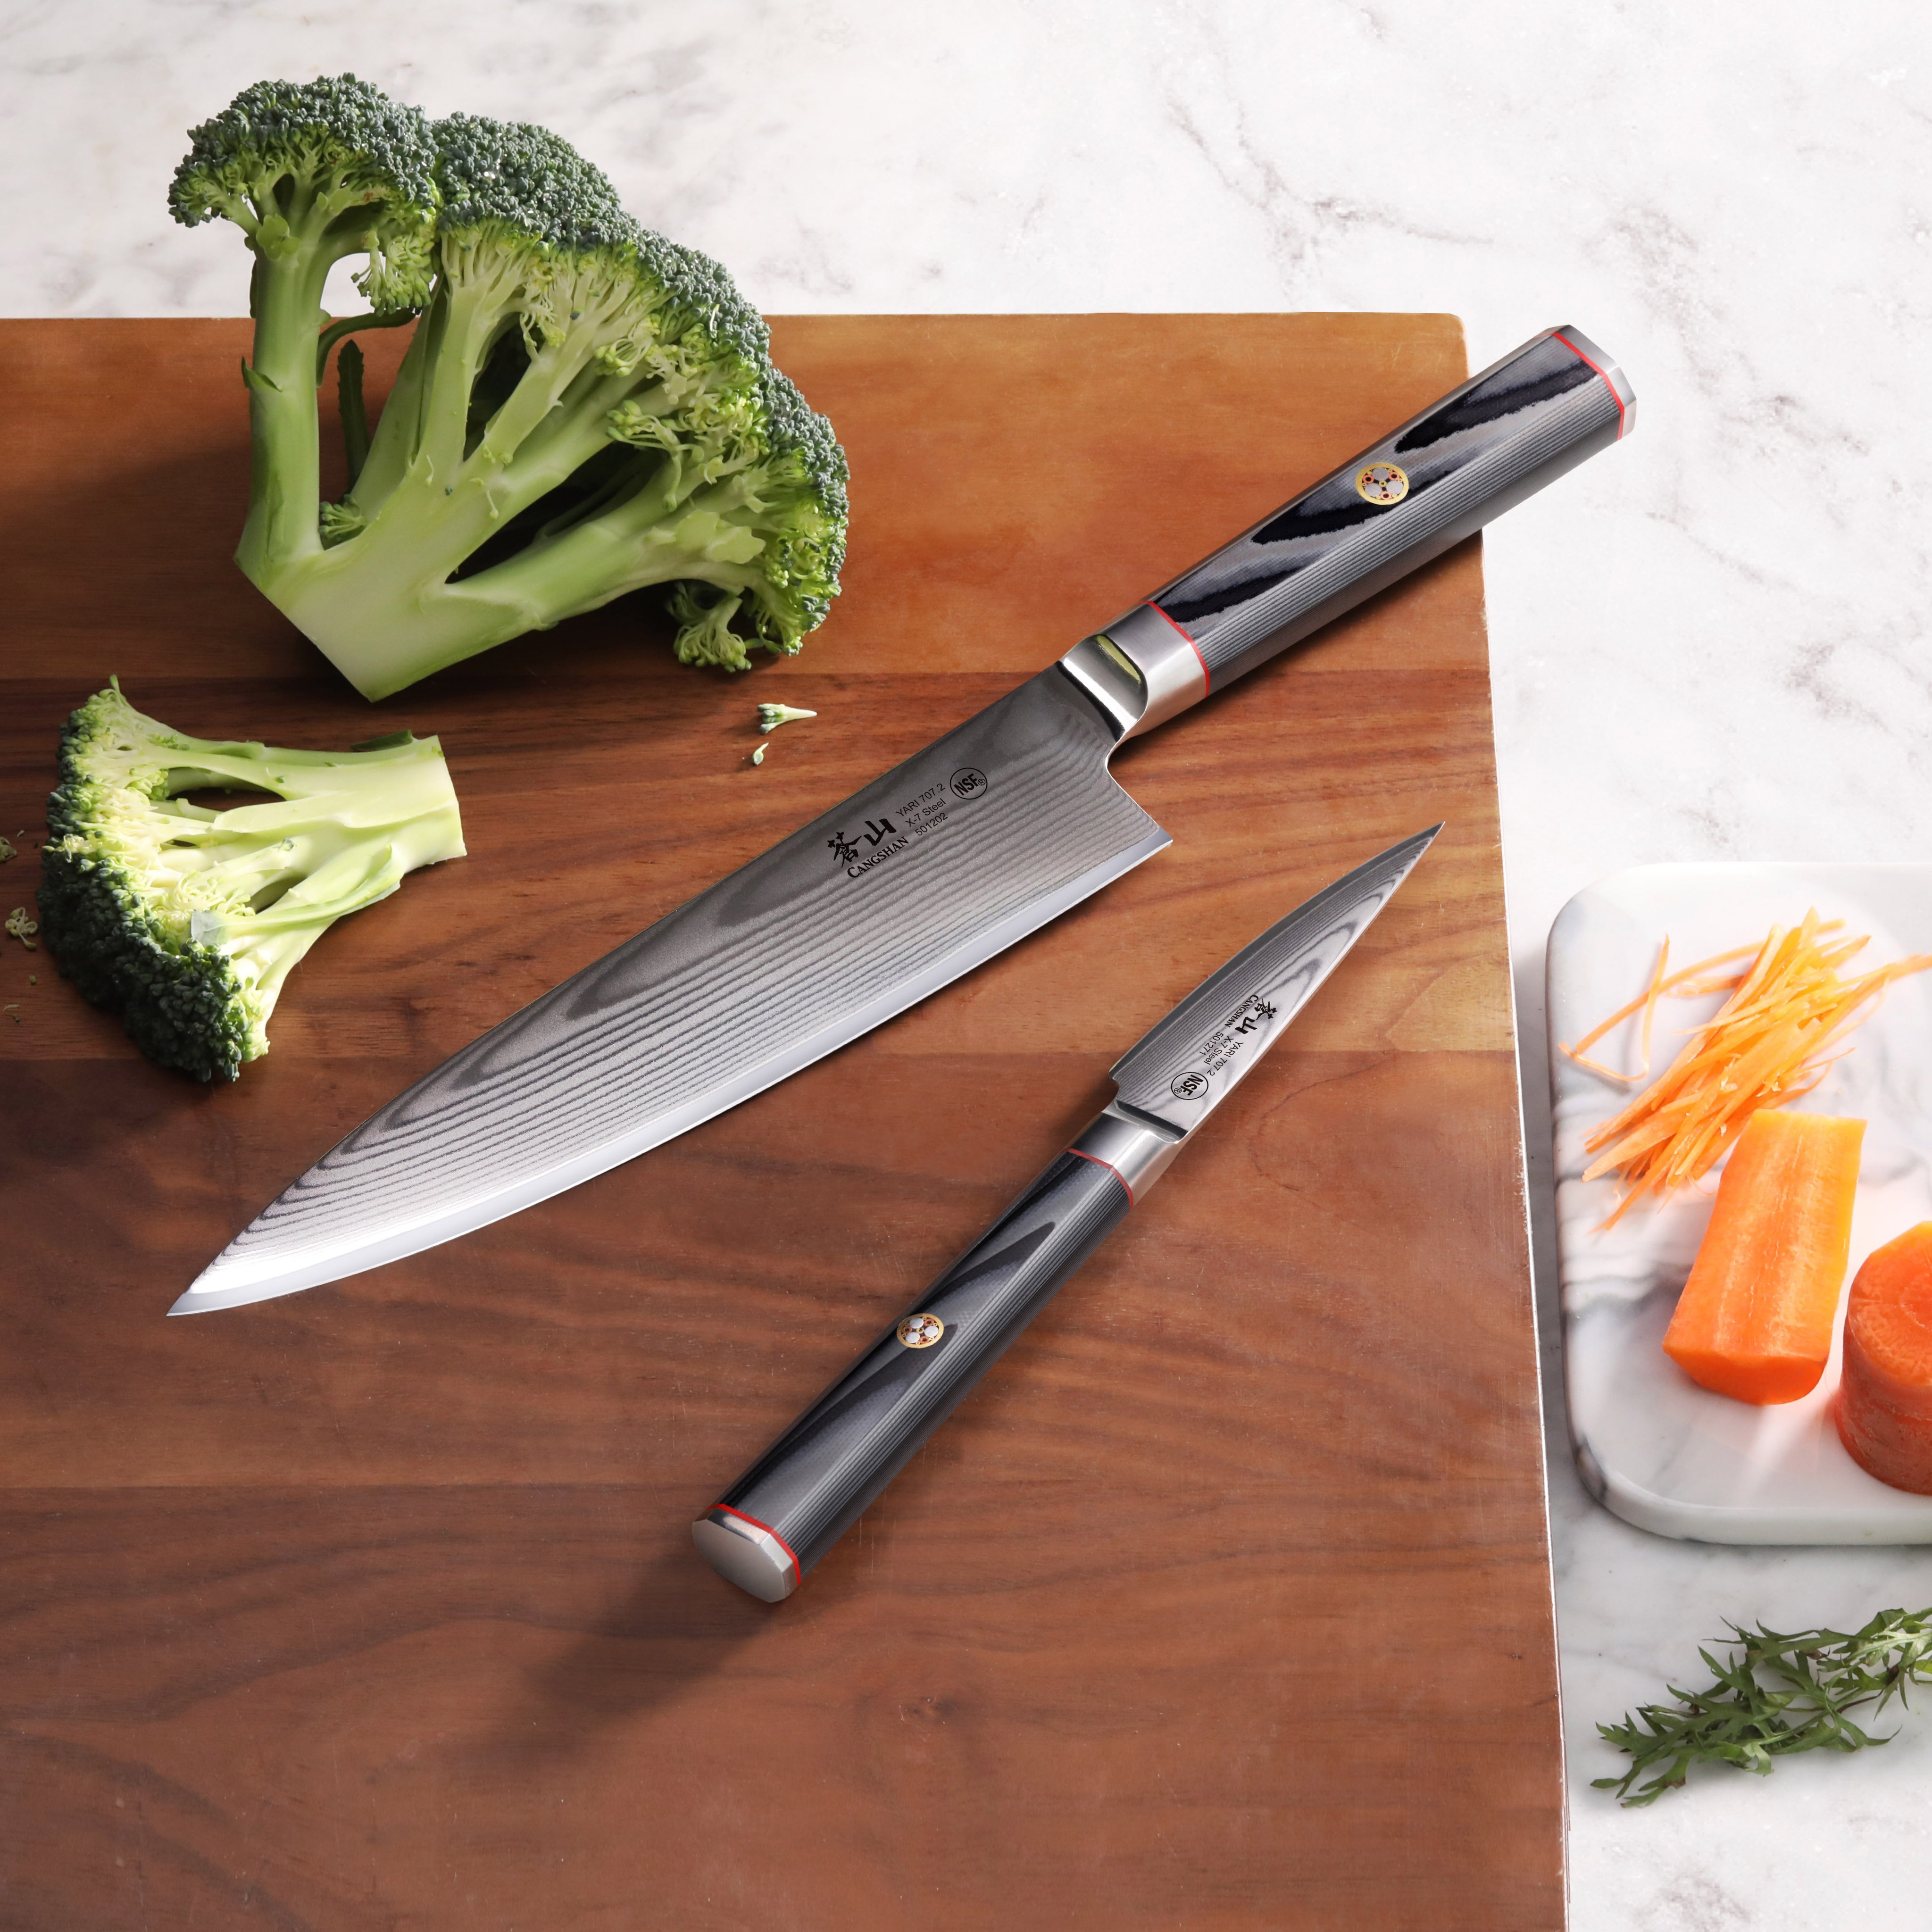 Cangshan Haku Series 6 Chef Knife with Sheath